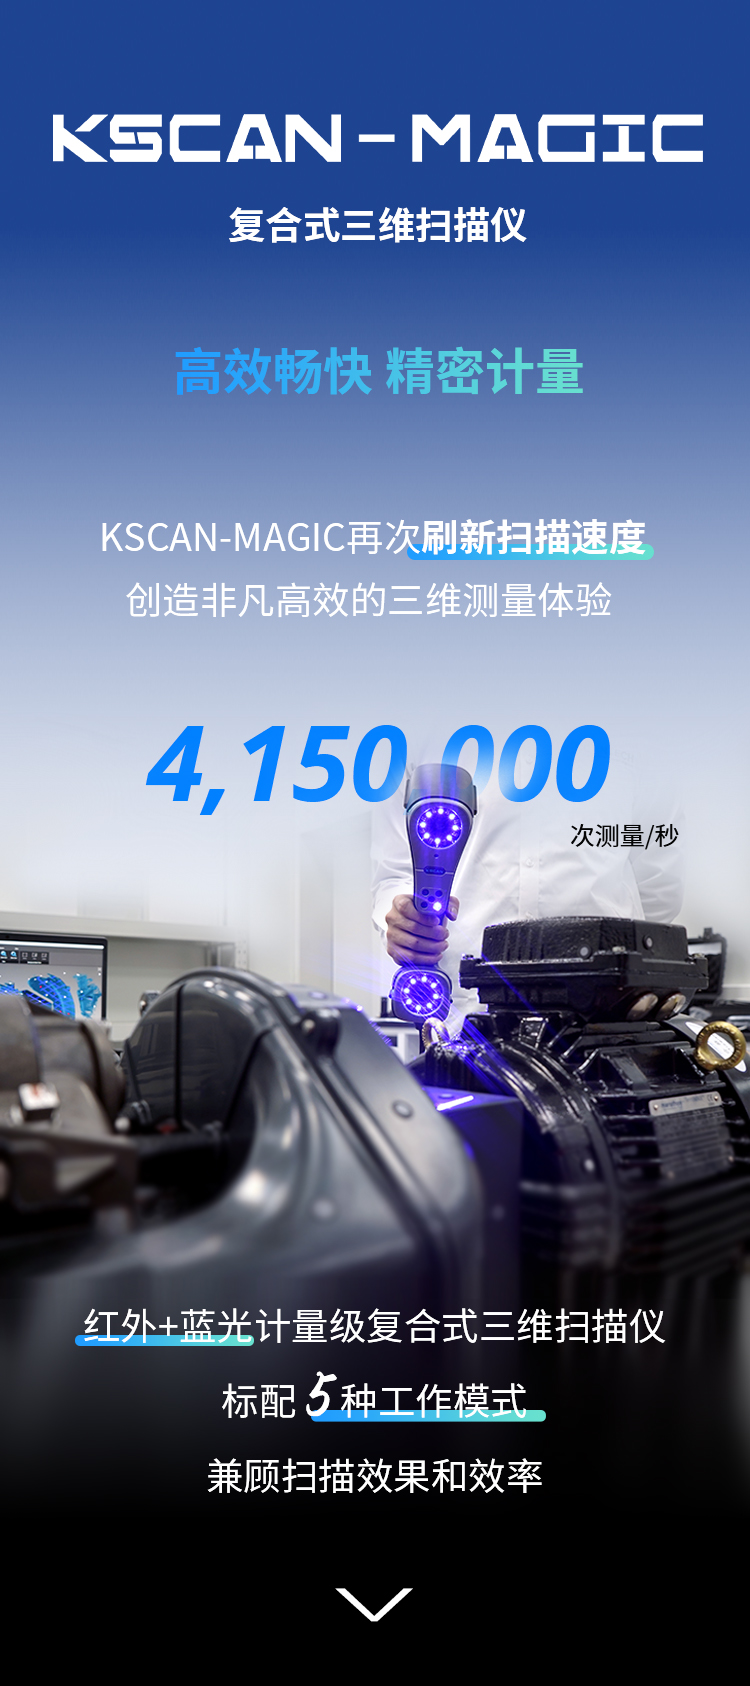 KScan-magic 再次刷新扫描速度